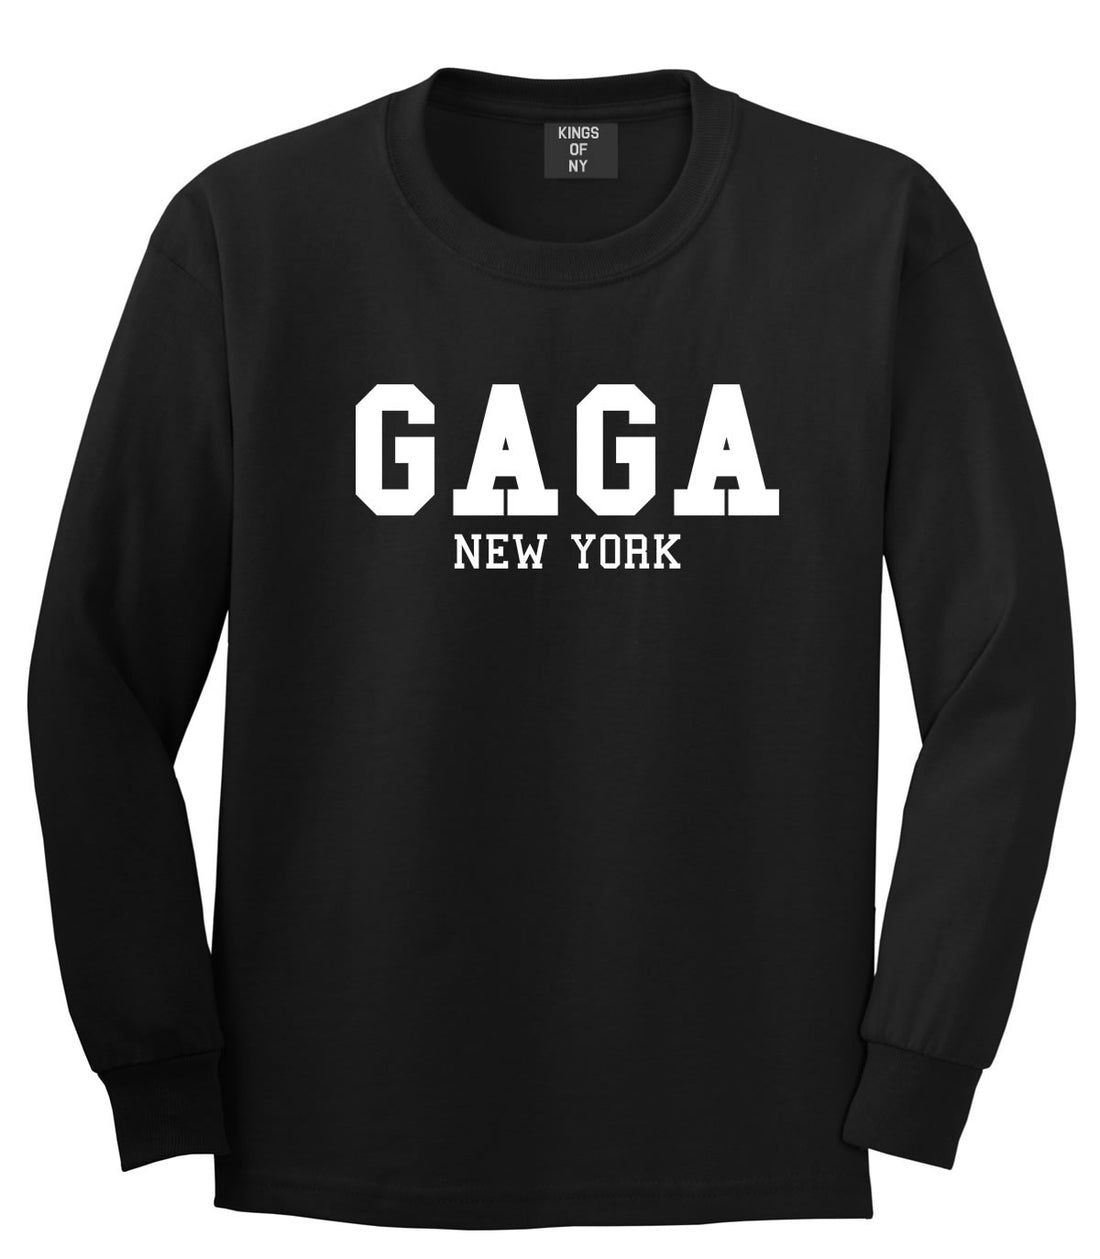 Gaga New York Long Sleeve T-Shirt in Black by Kings Of NY